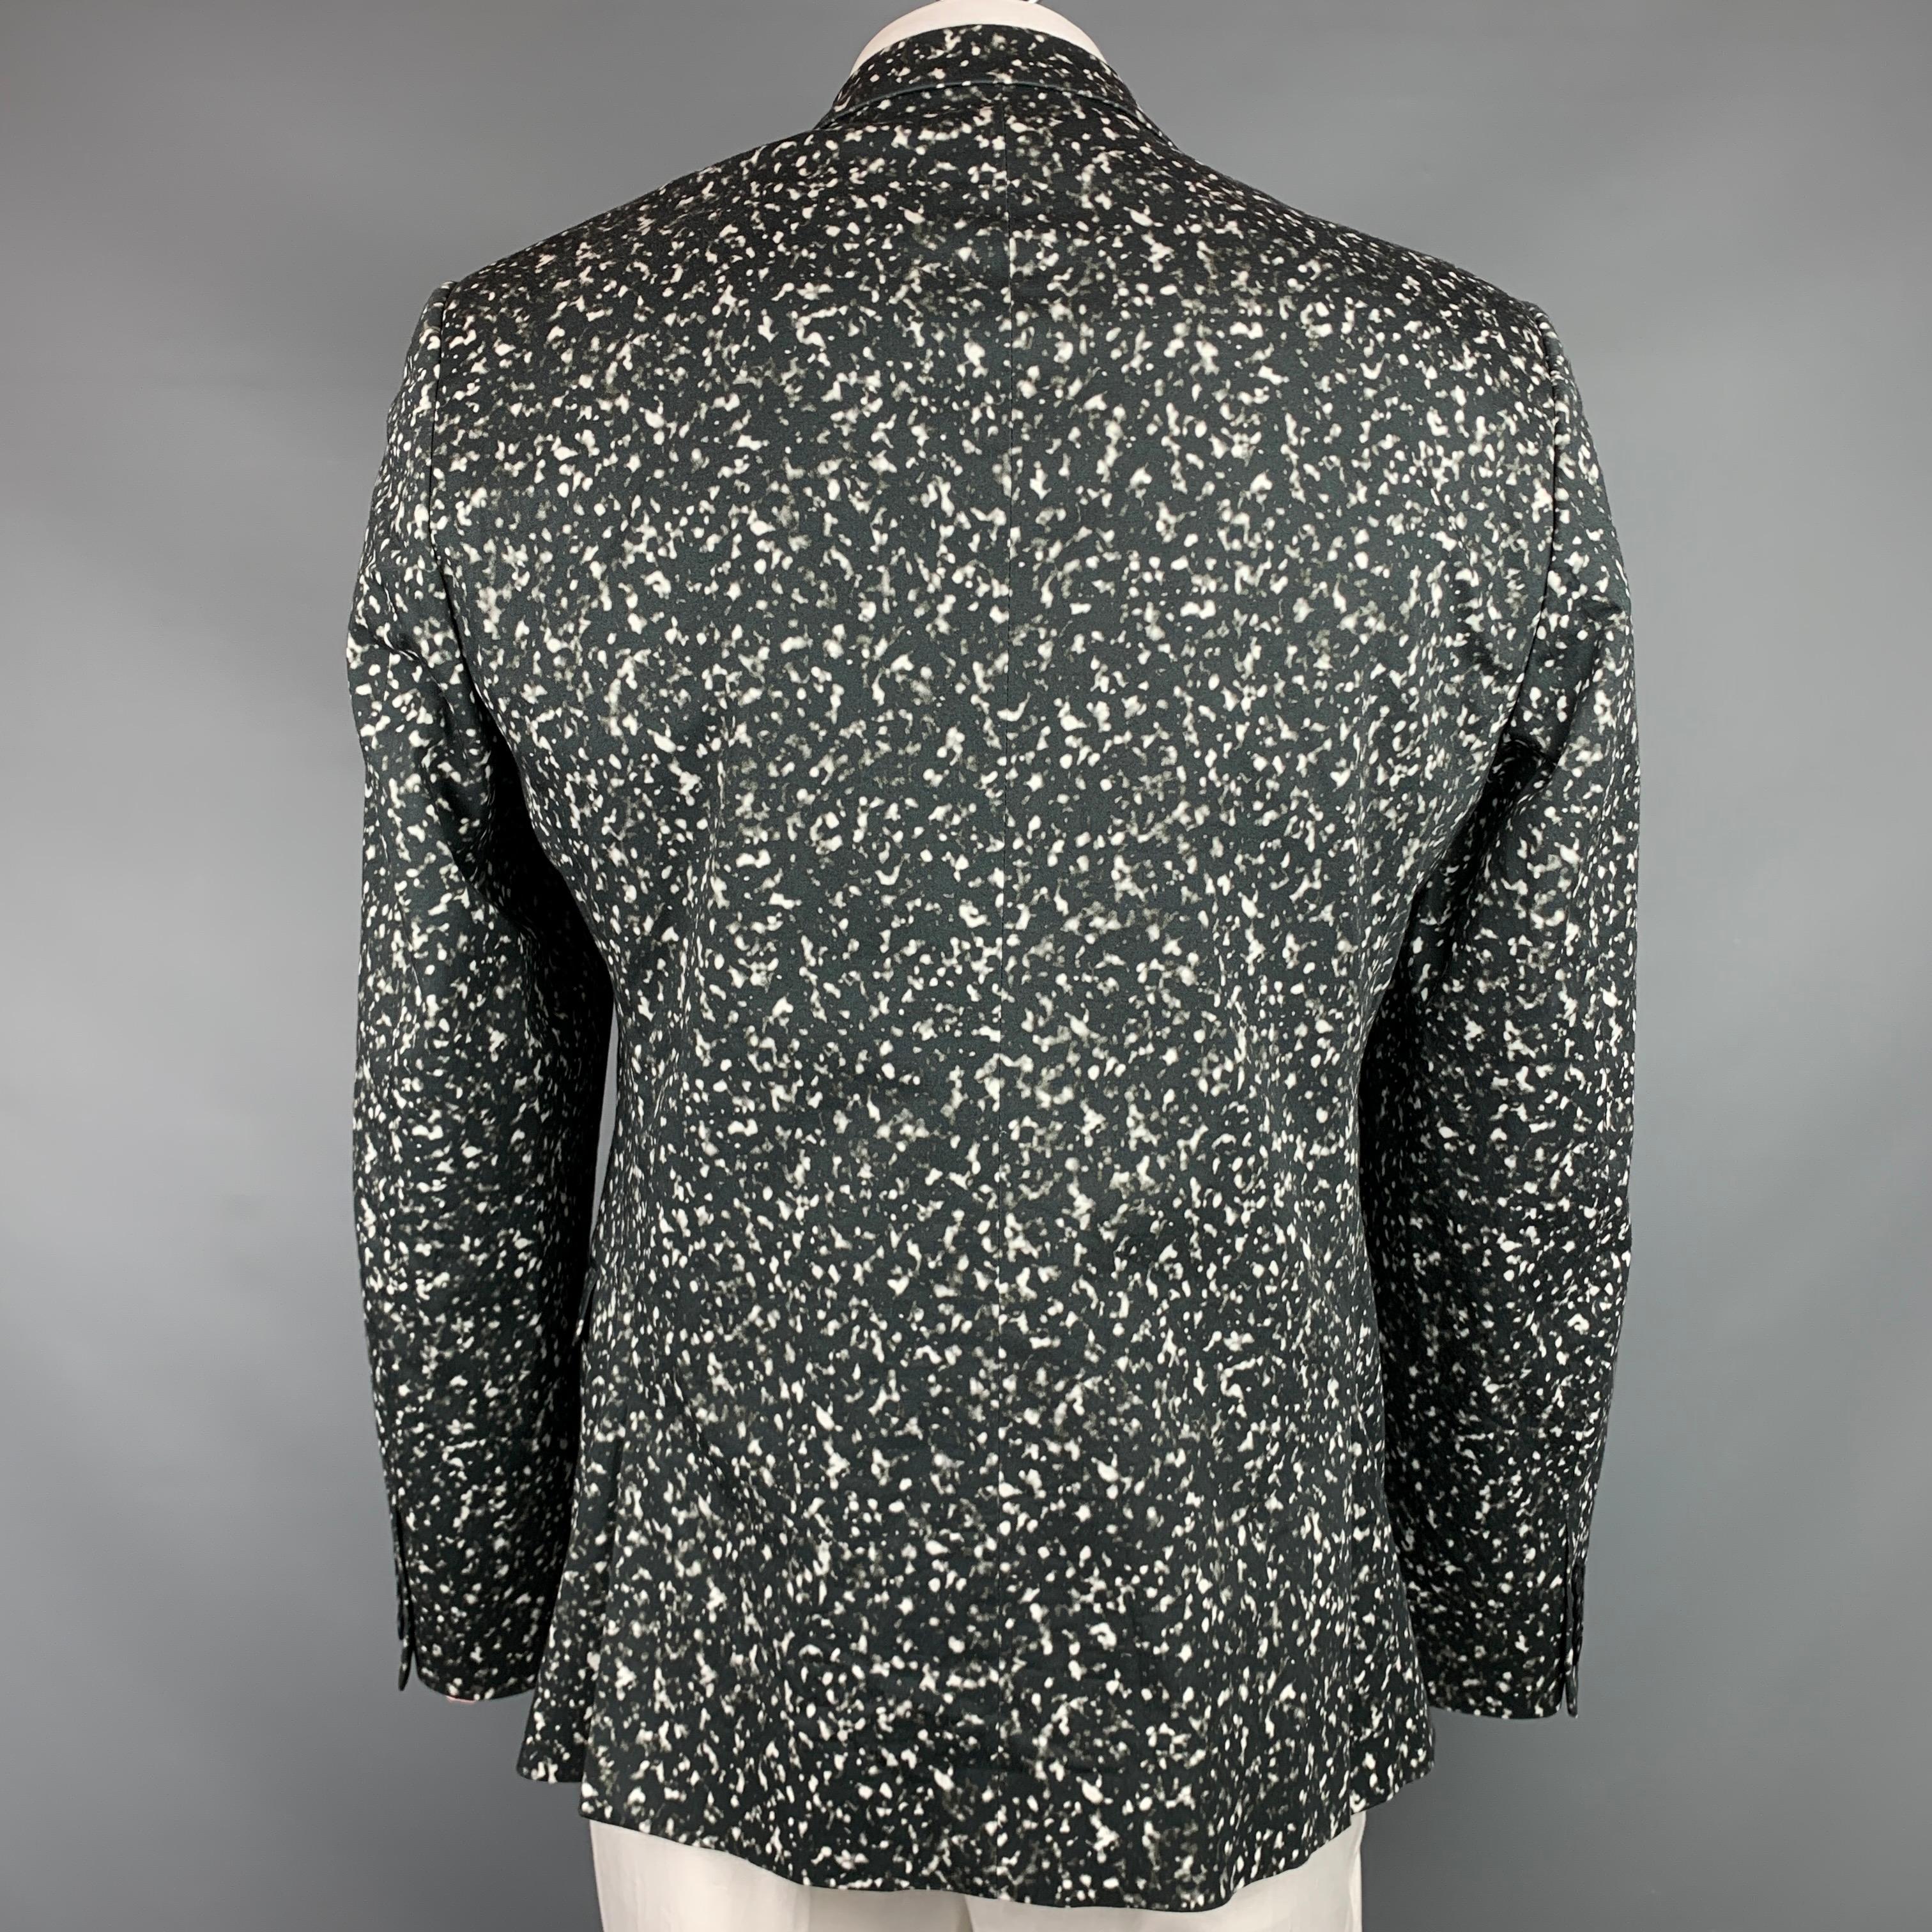 CALVIN KLEIN COLLECTION Size 44 Black & White Print Cotton Blend Sport Coat 1